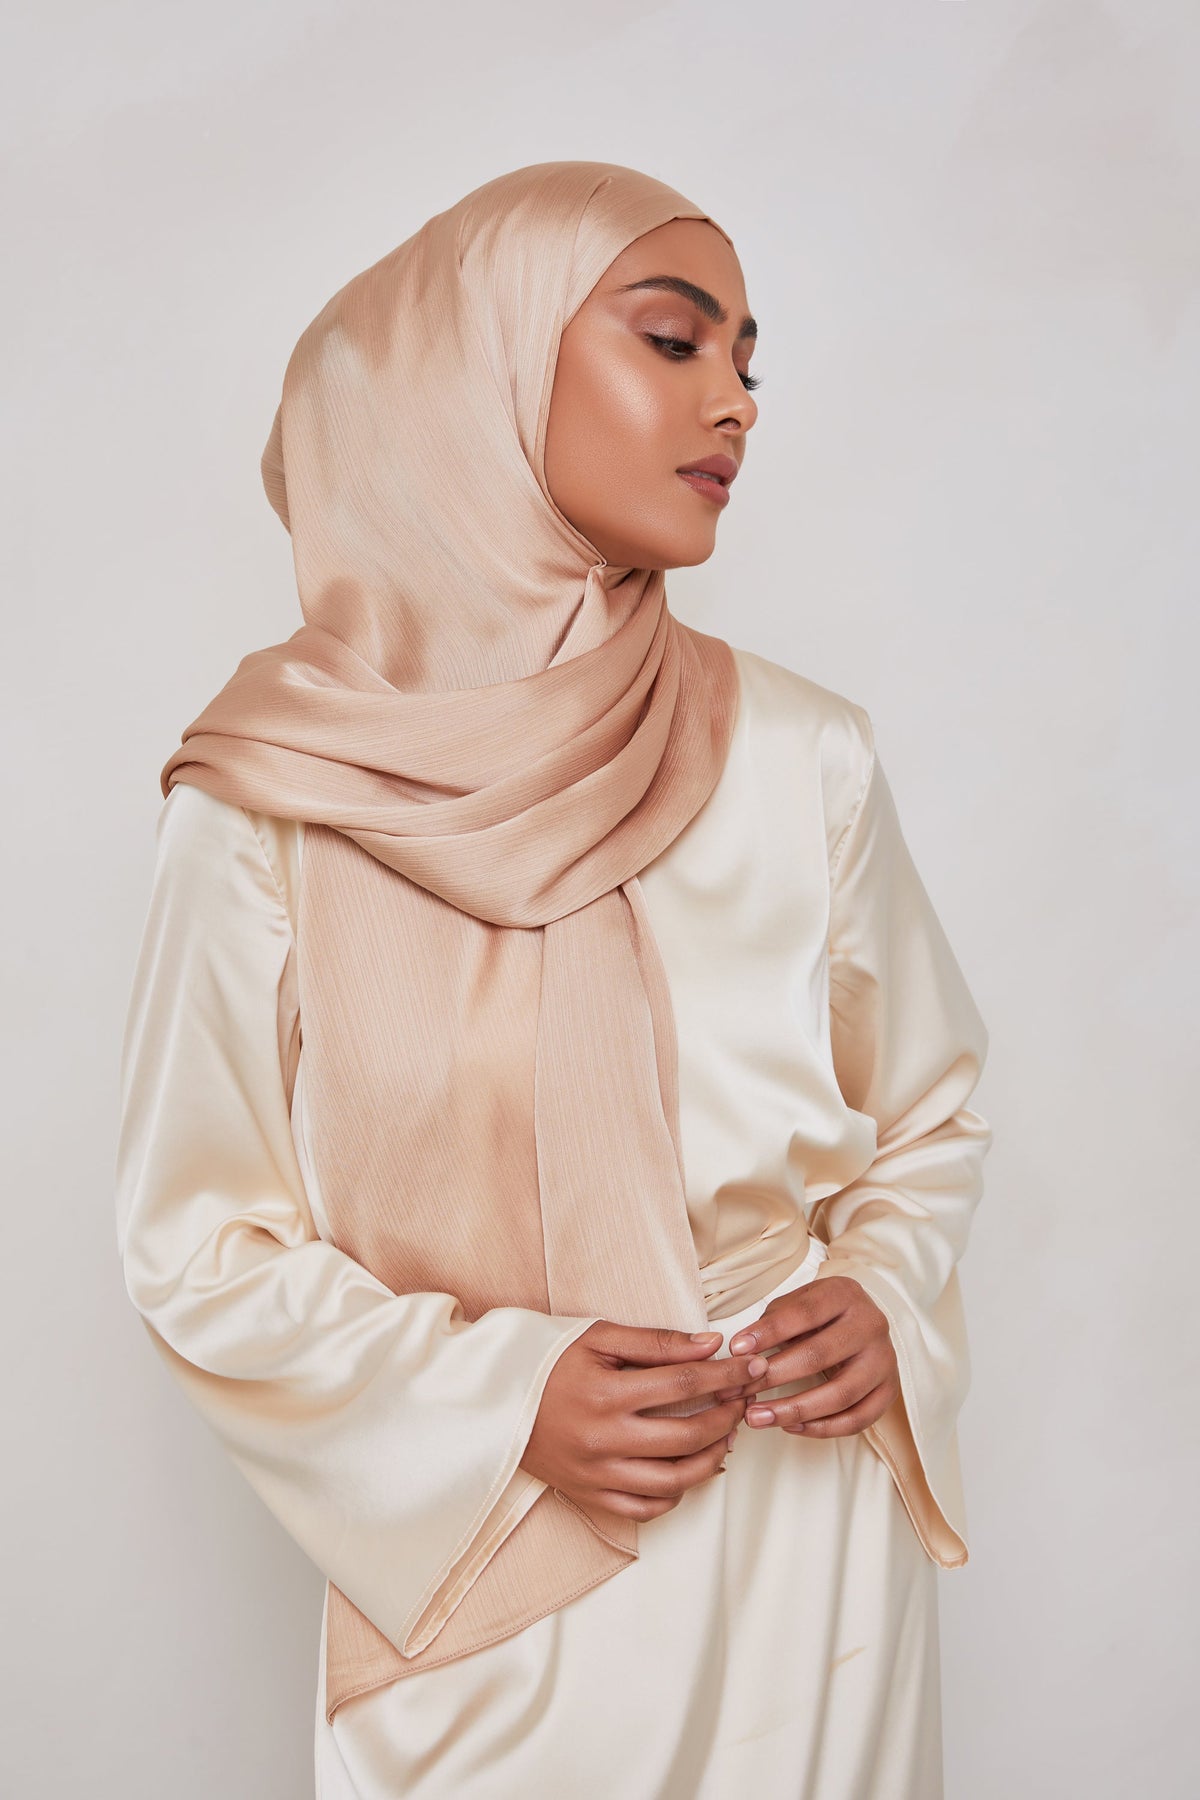 TEXTURE Satin Crepe Hijab - Ginger Crepe epschoolboard 